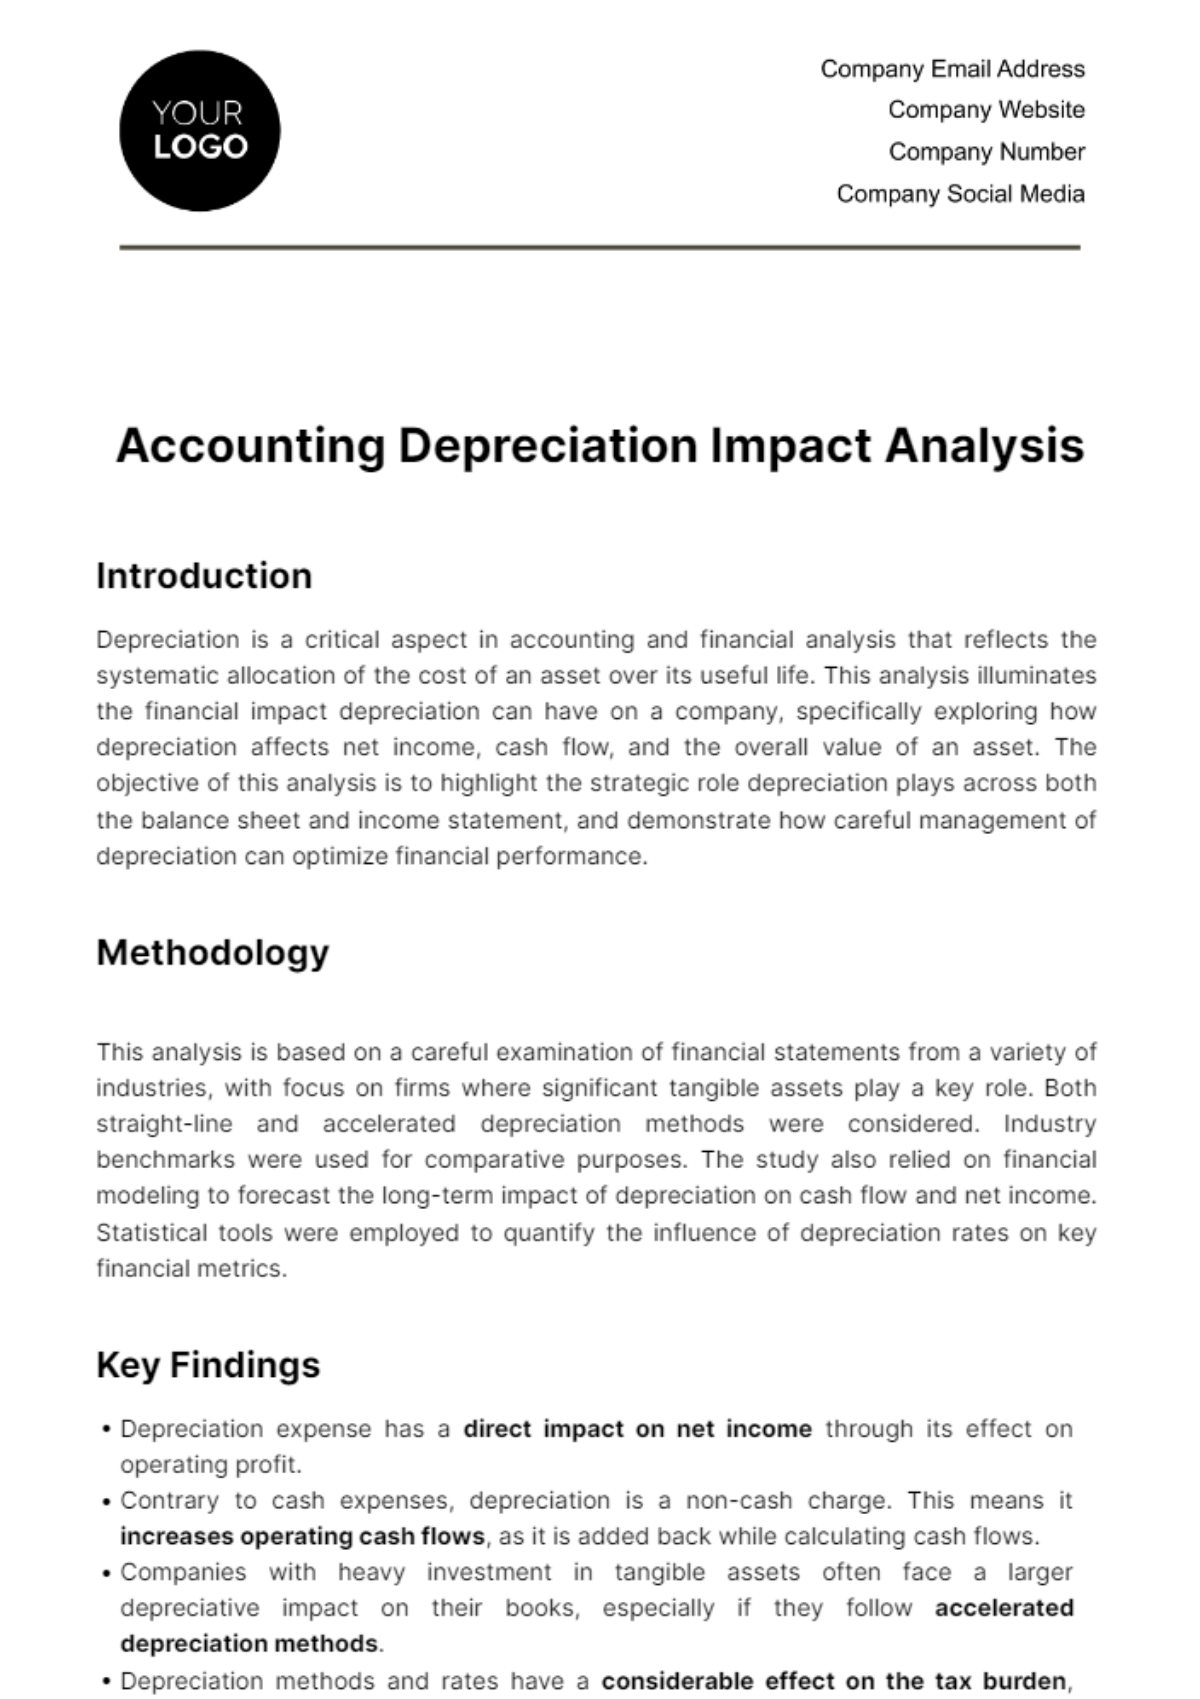 Free Accounting Depreciation Impact Analysis Template